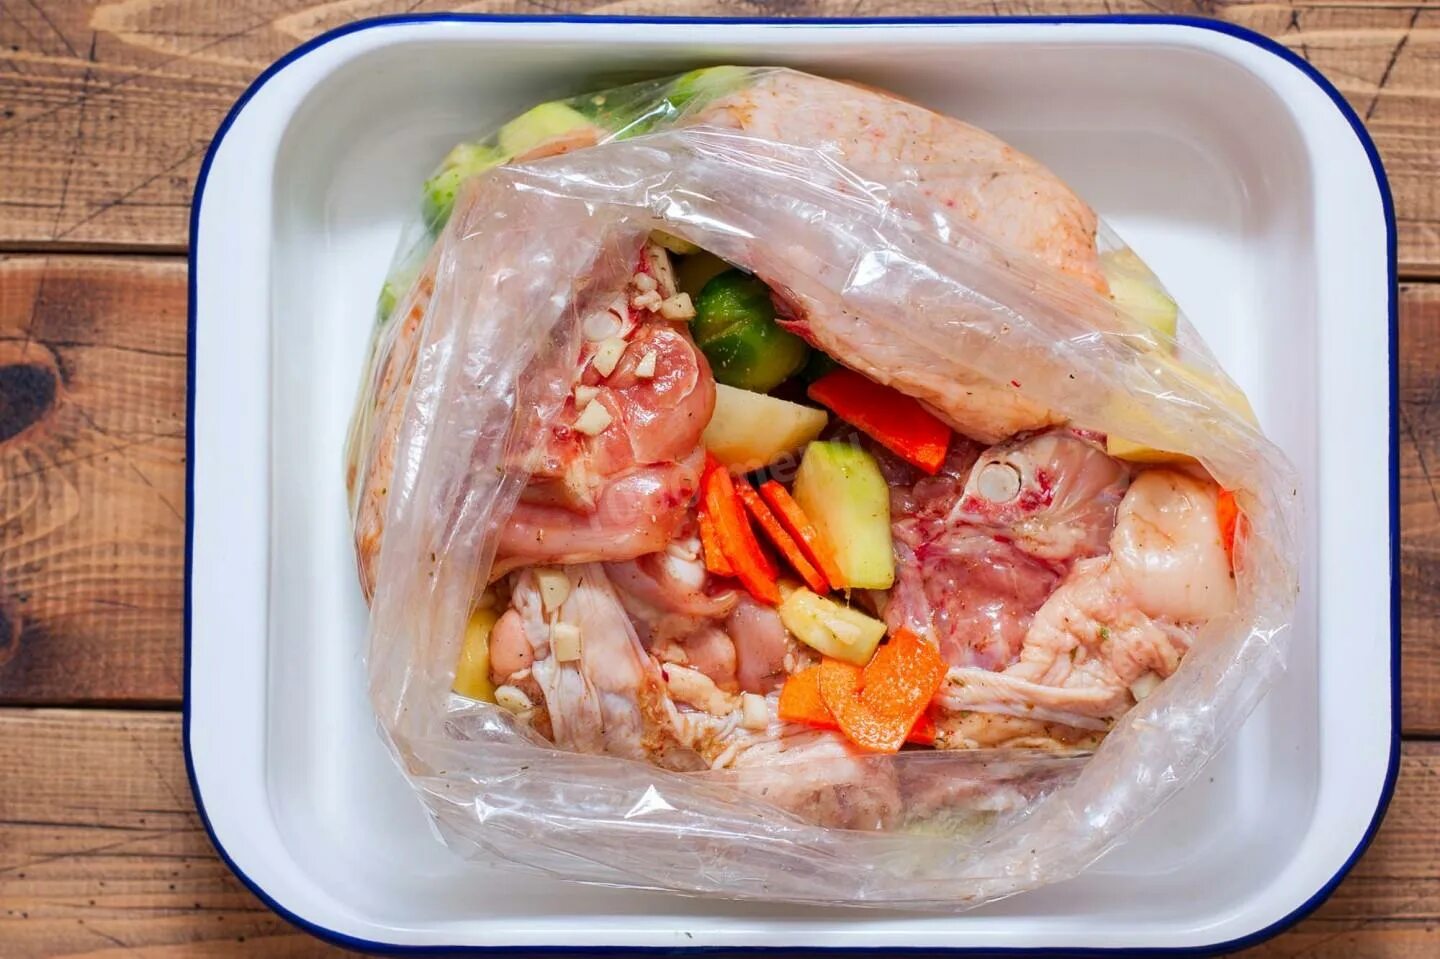 Рис с курицей в пакете для запекания. Курица с овощами в духовке в рукаве. Курица с овощами в рукаве для запекания. Курица запечённая с овощами в рукаве. Овощи с курицей в рукаве для запекания в духовке.